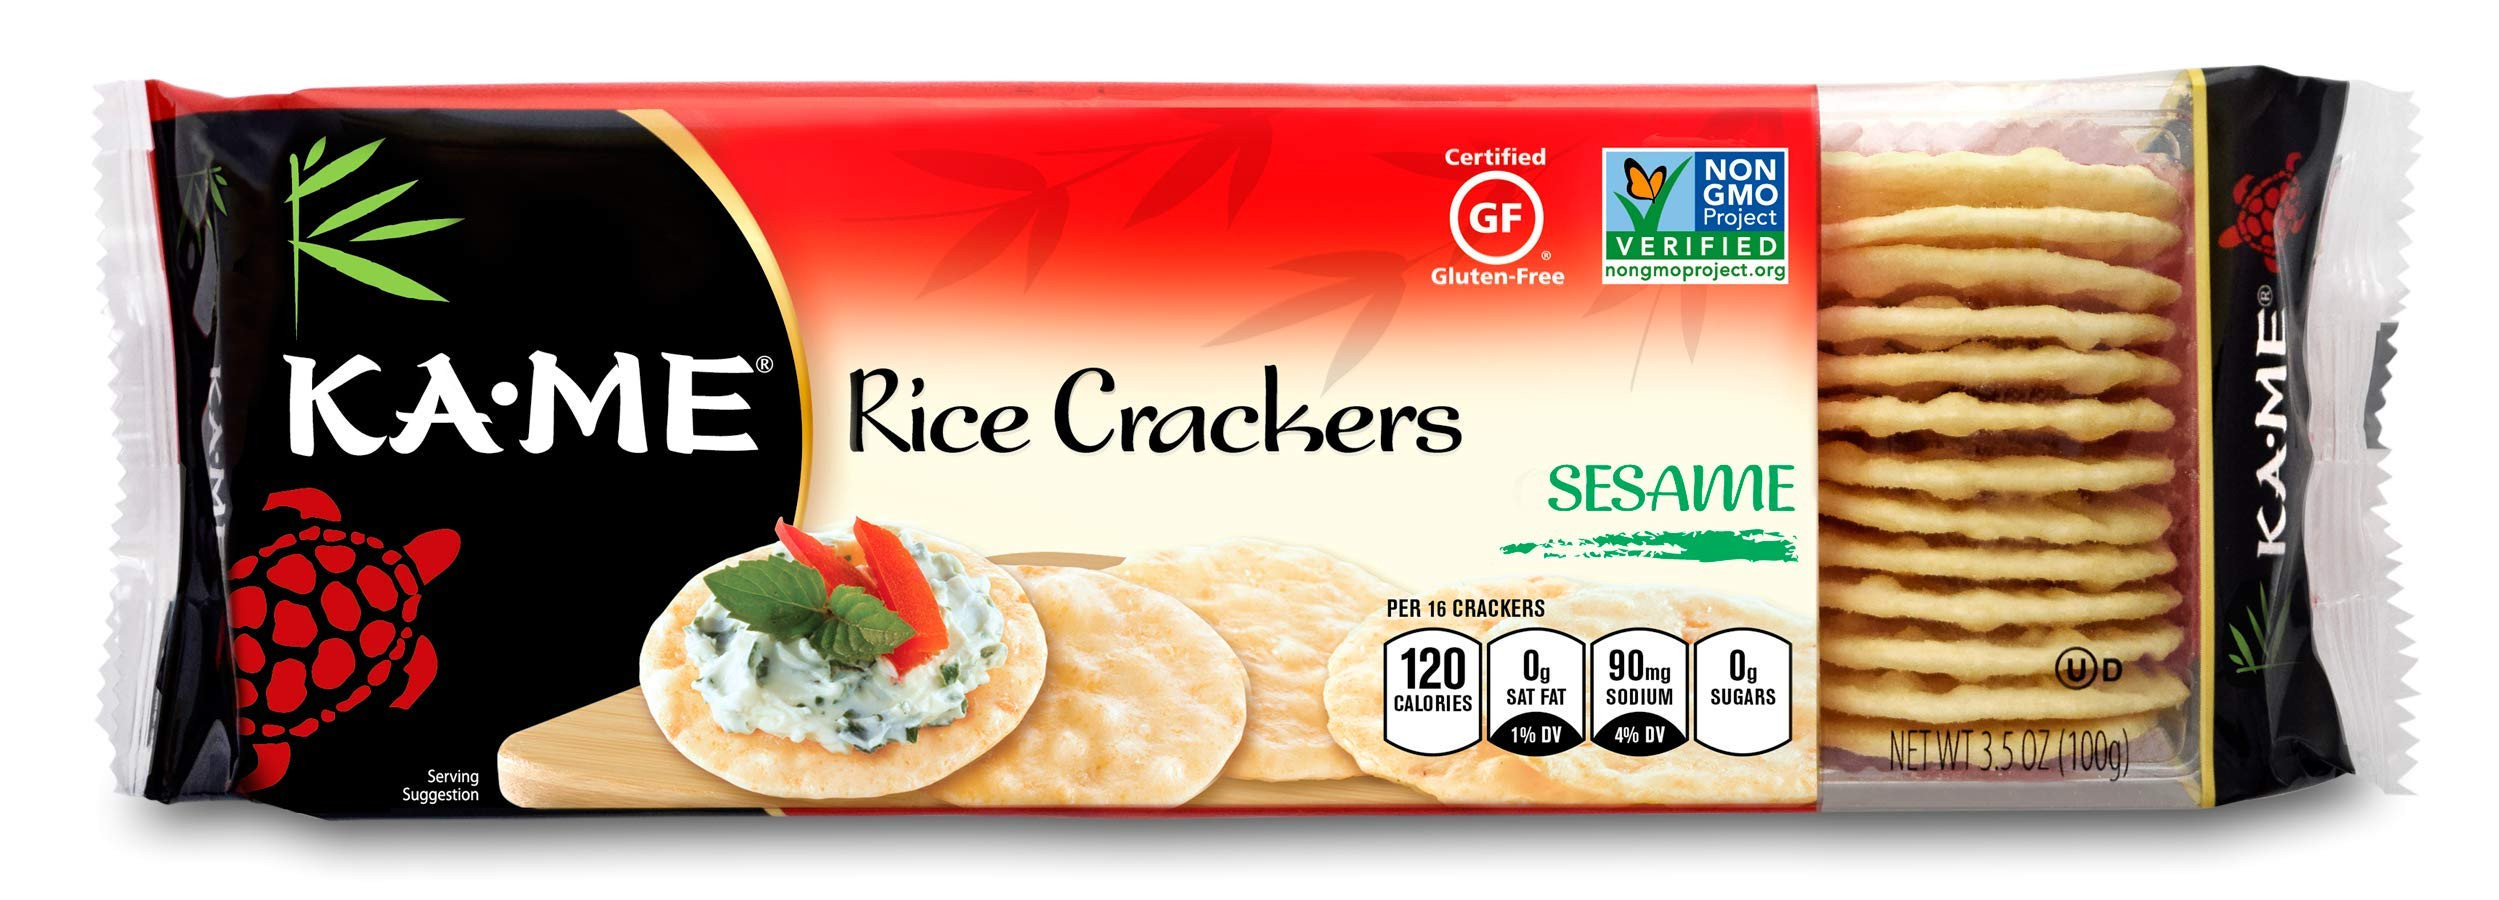 Gluten Free Rice Crackers
 Ka Me Gluten Free Rice Crackers Wasabi 3 5 Ounce Pack